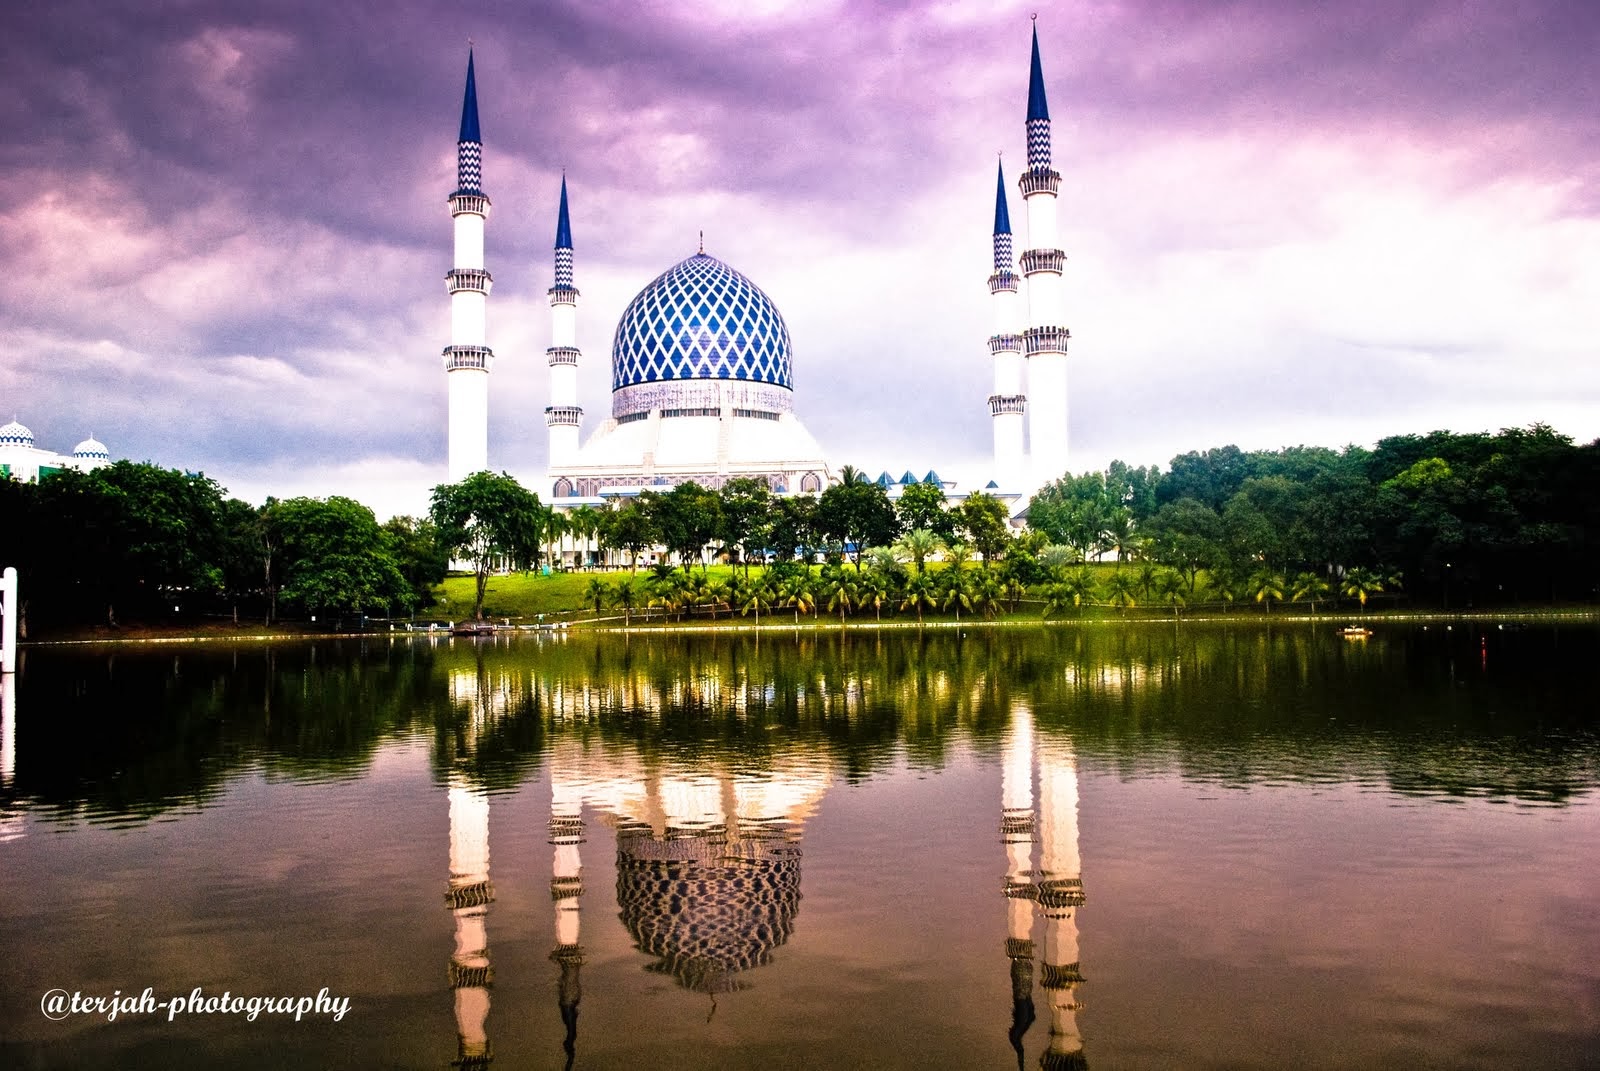 POTO Travel & Tours: Gambar Masjid Yang Indah di Malaysia!